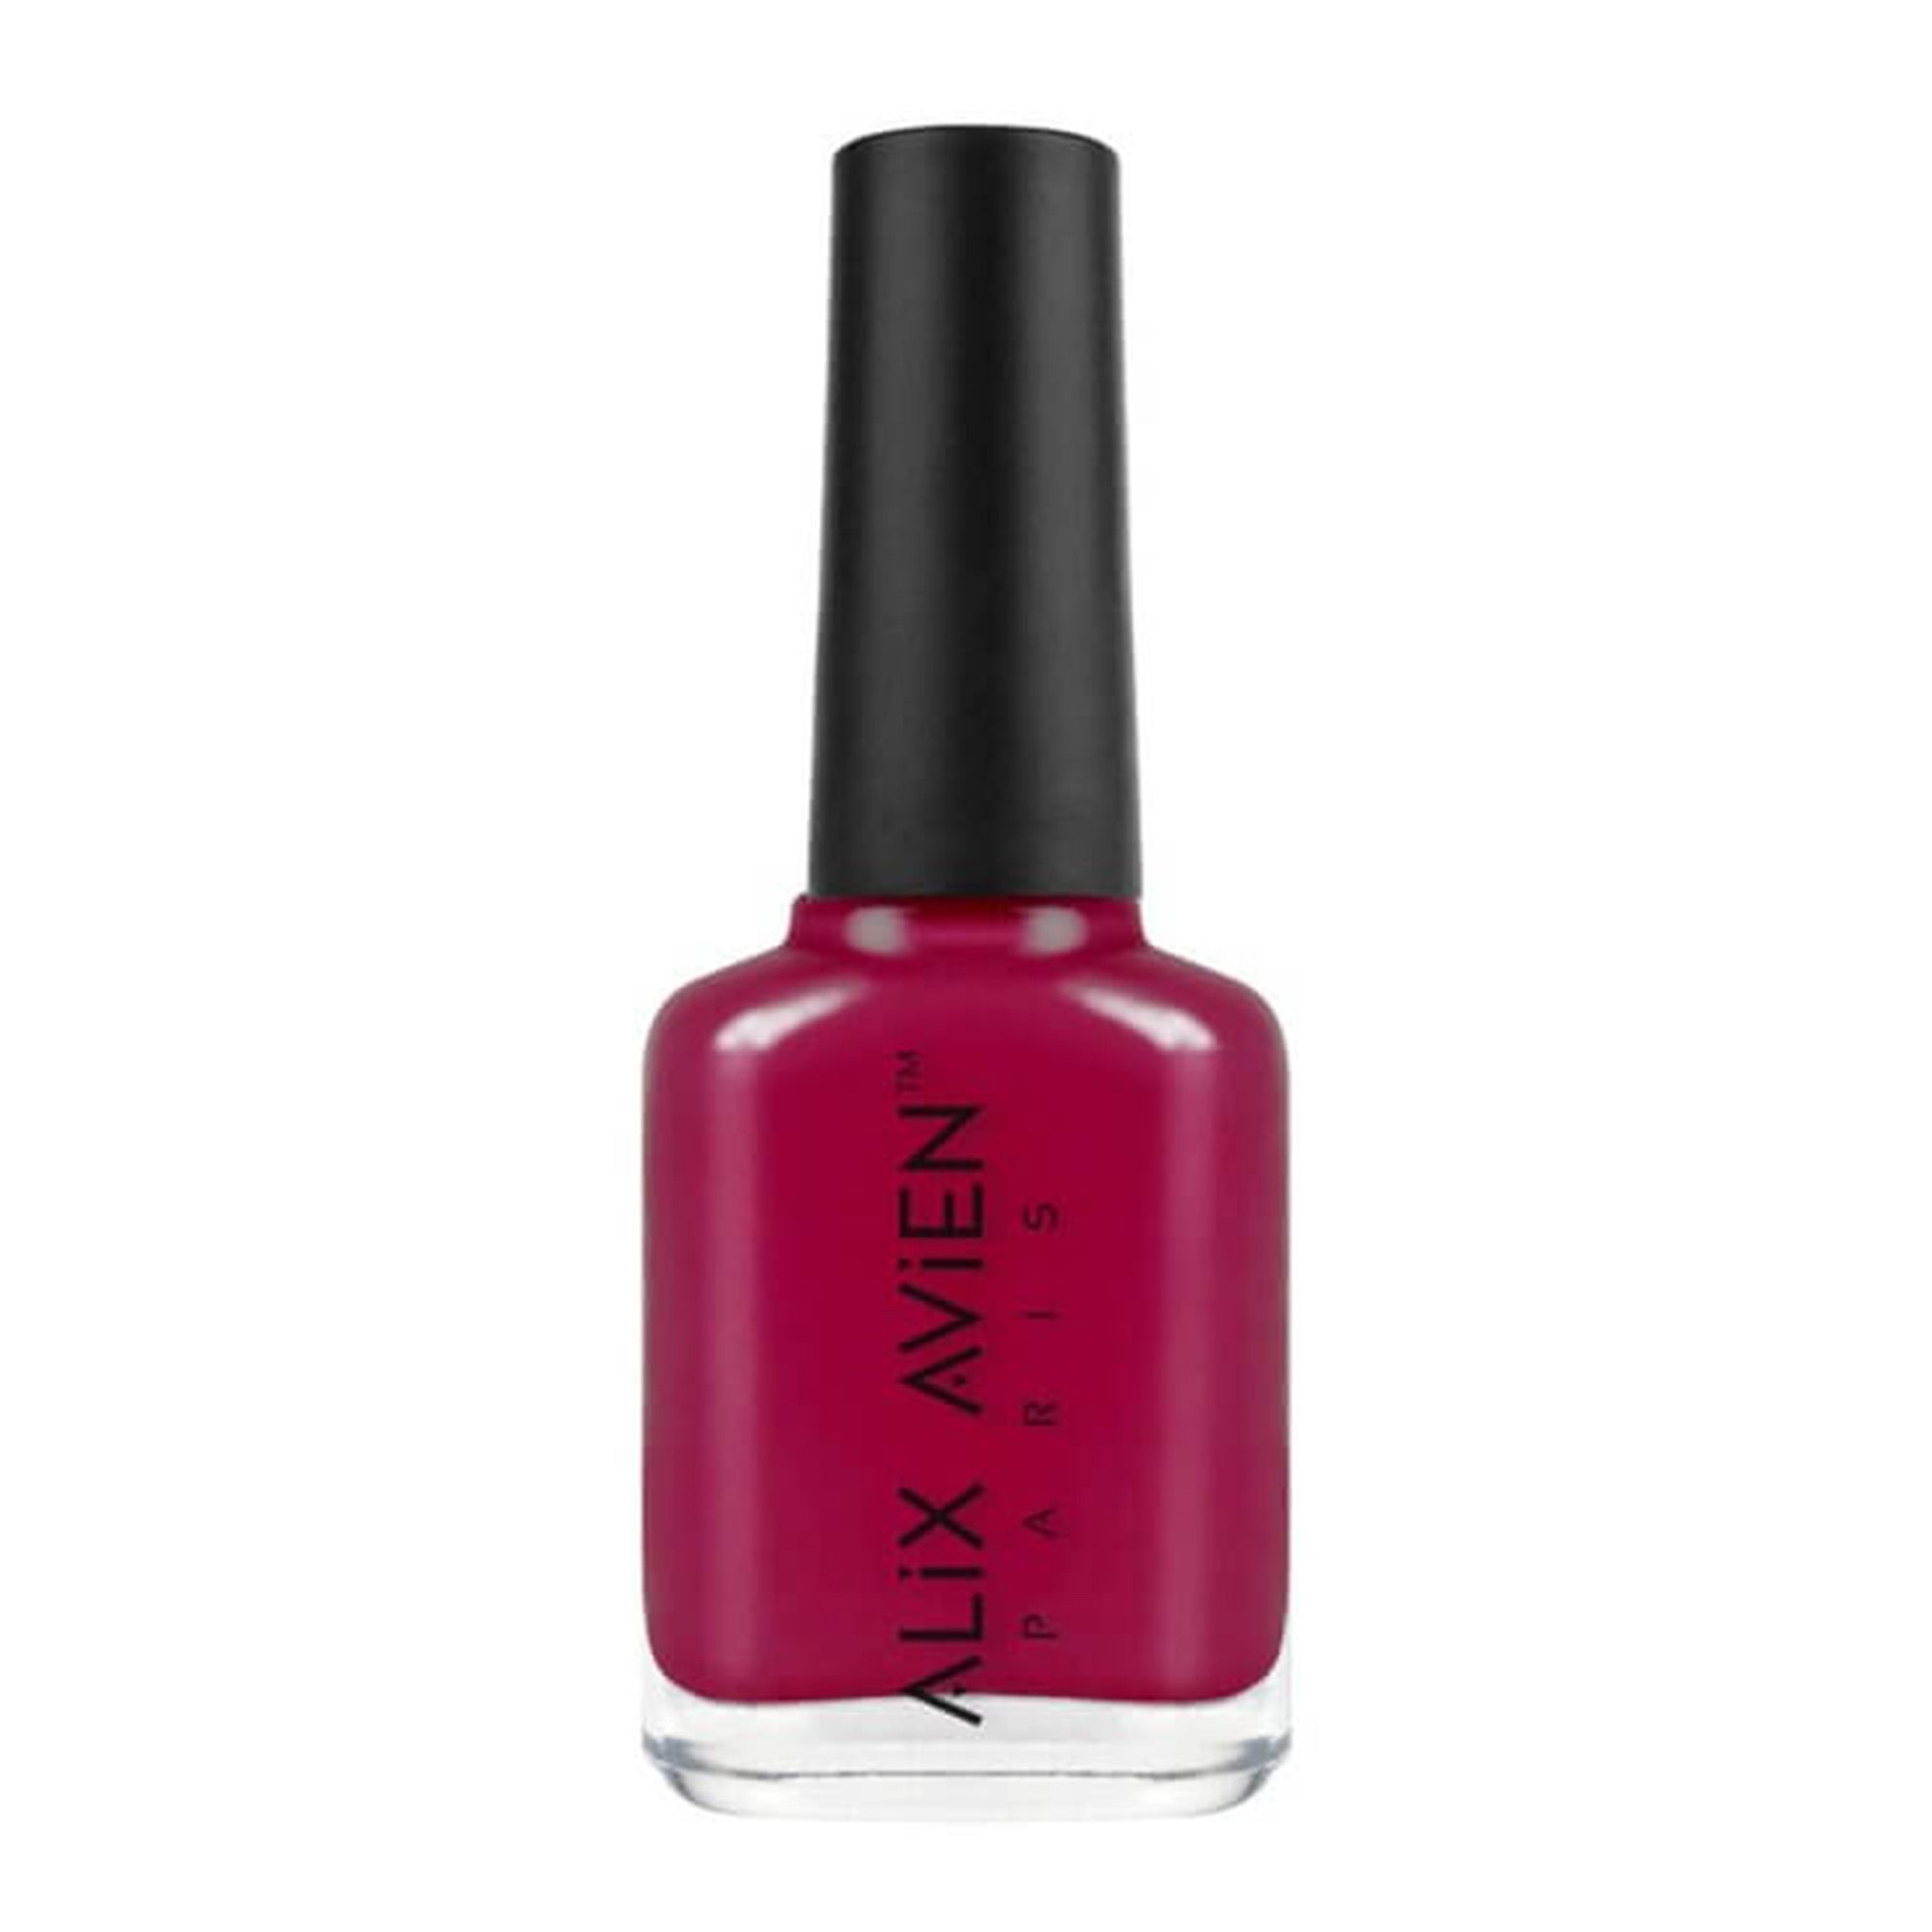 Alix Avien - Nail Polish No.104 (Luxury Red)